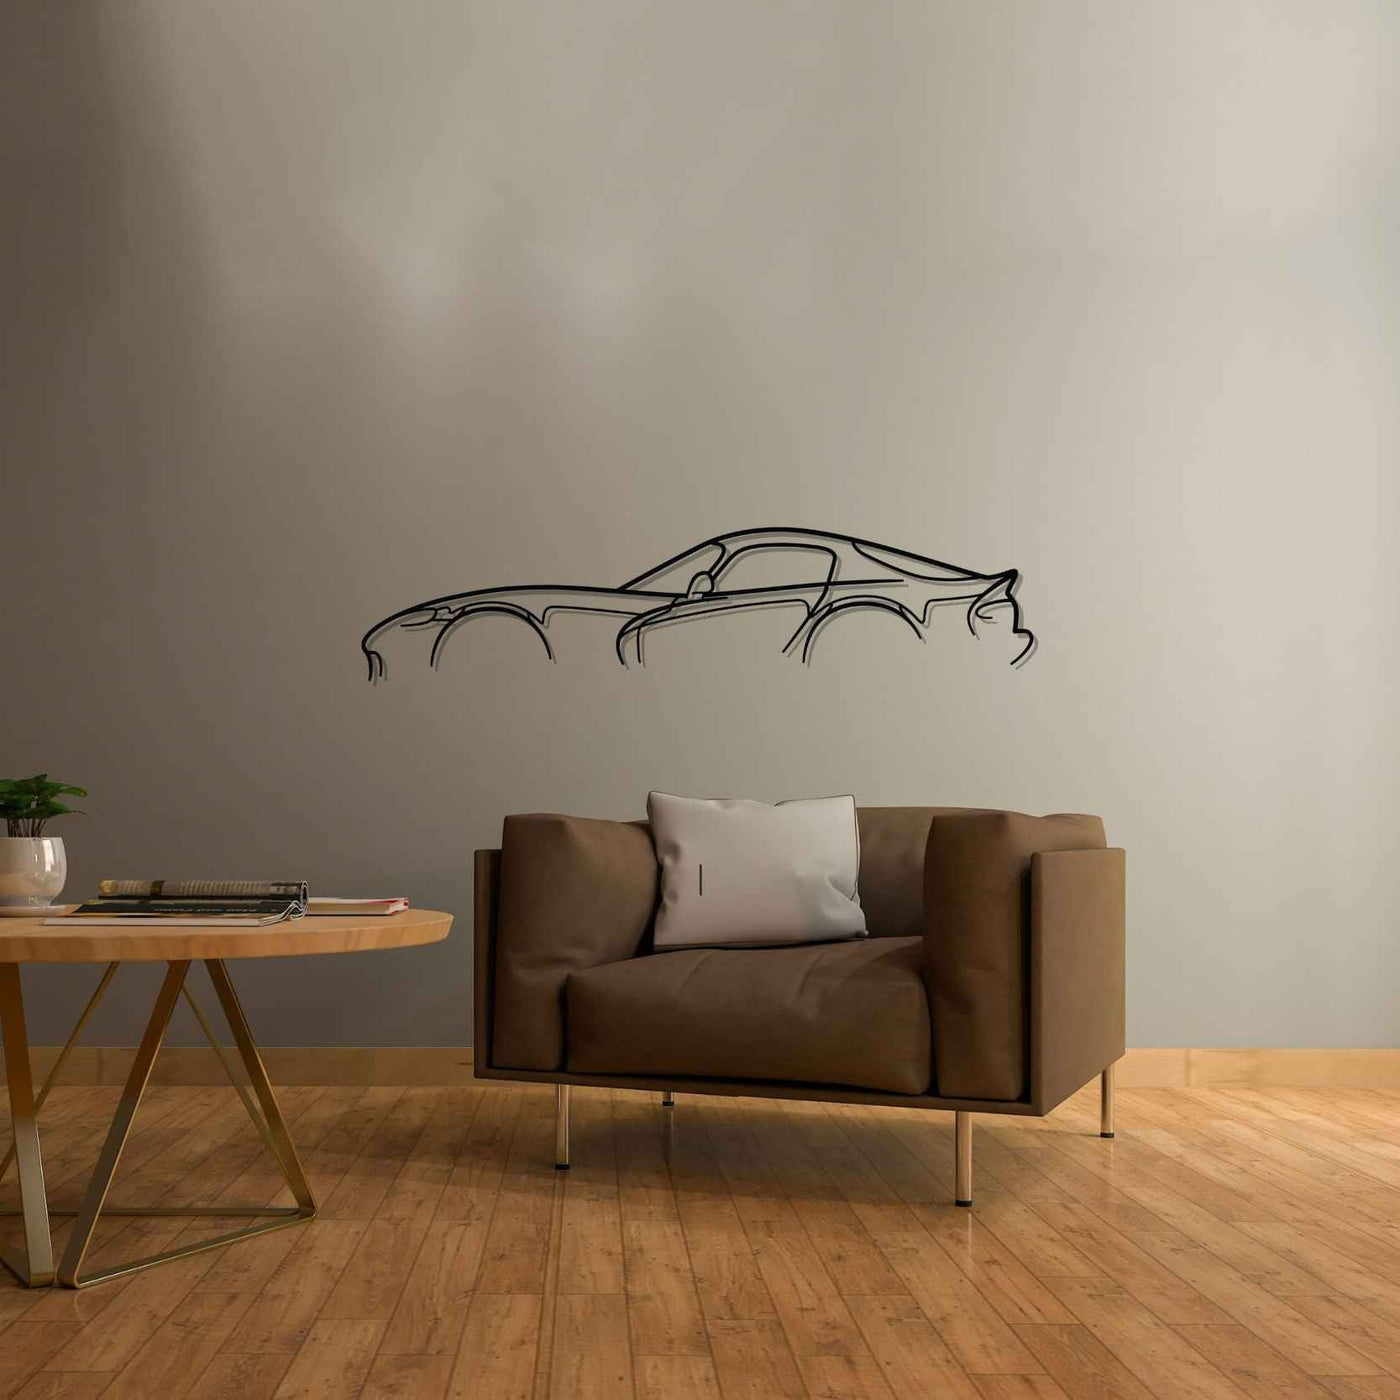 Viper GTS Classic Silhouette Metal Wall Art